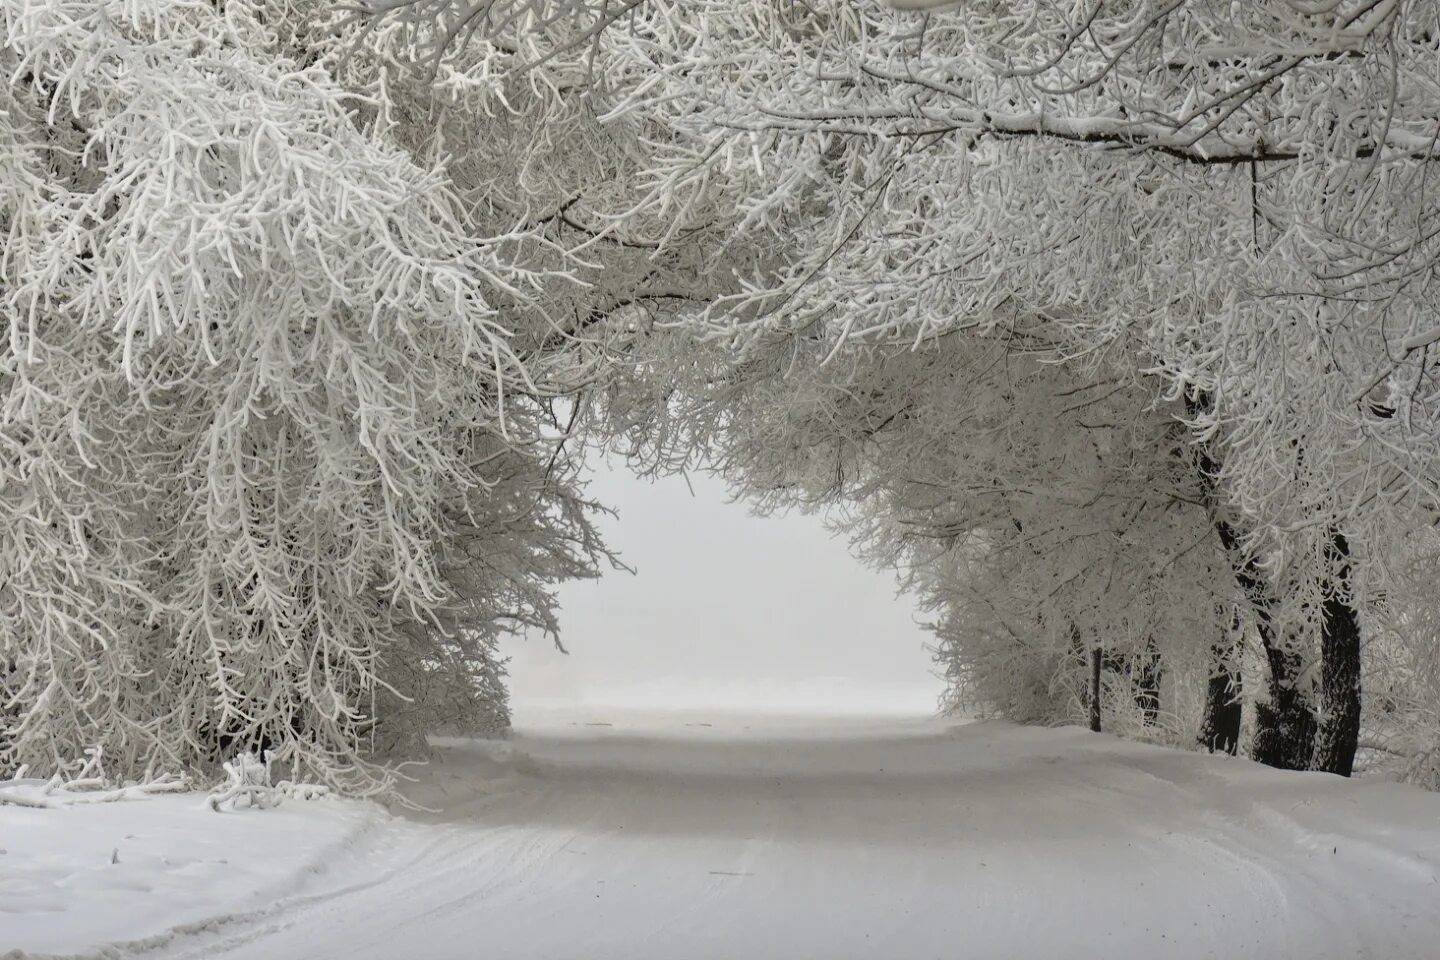 Винтер Сноу. Деревья в снегу. Зимний пейзаж. Снежный пейзаж. Разгар зимы